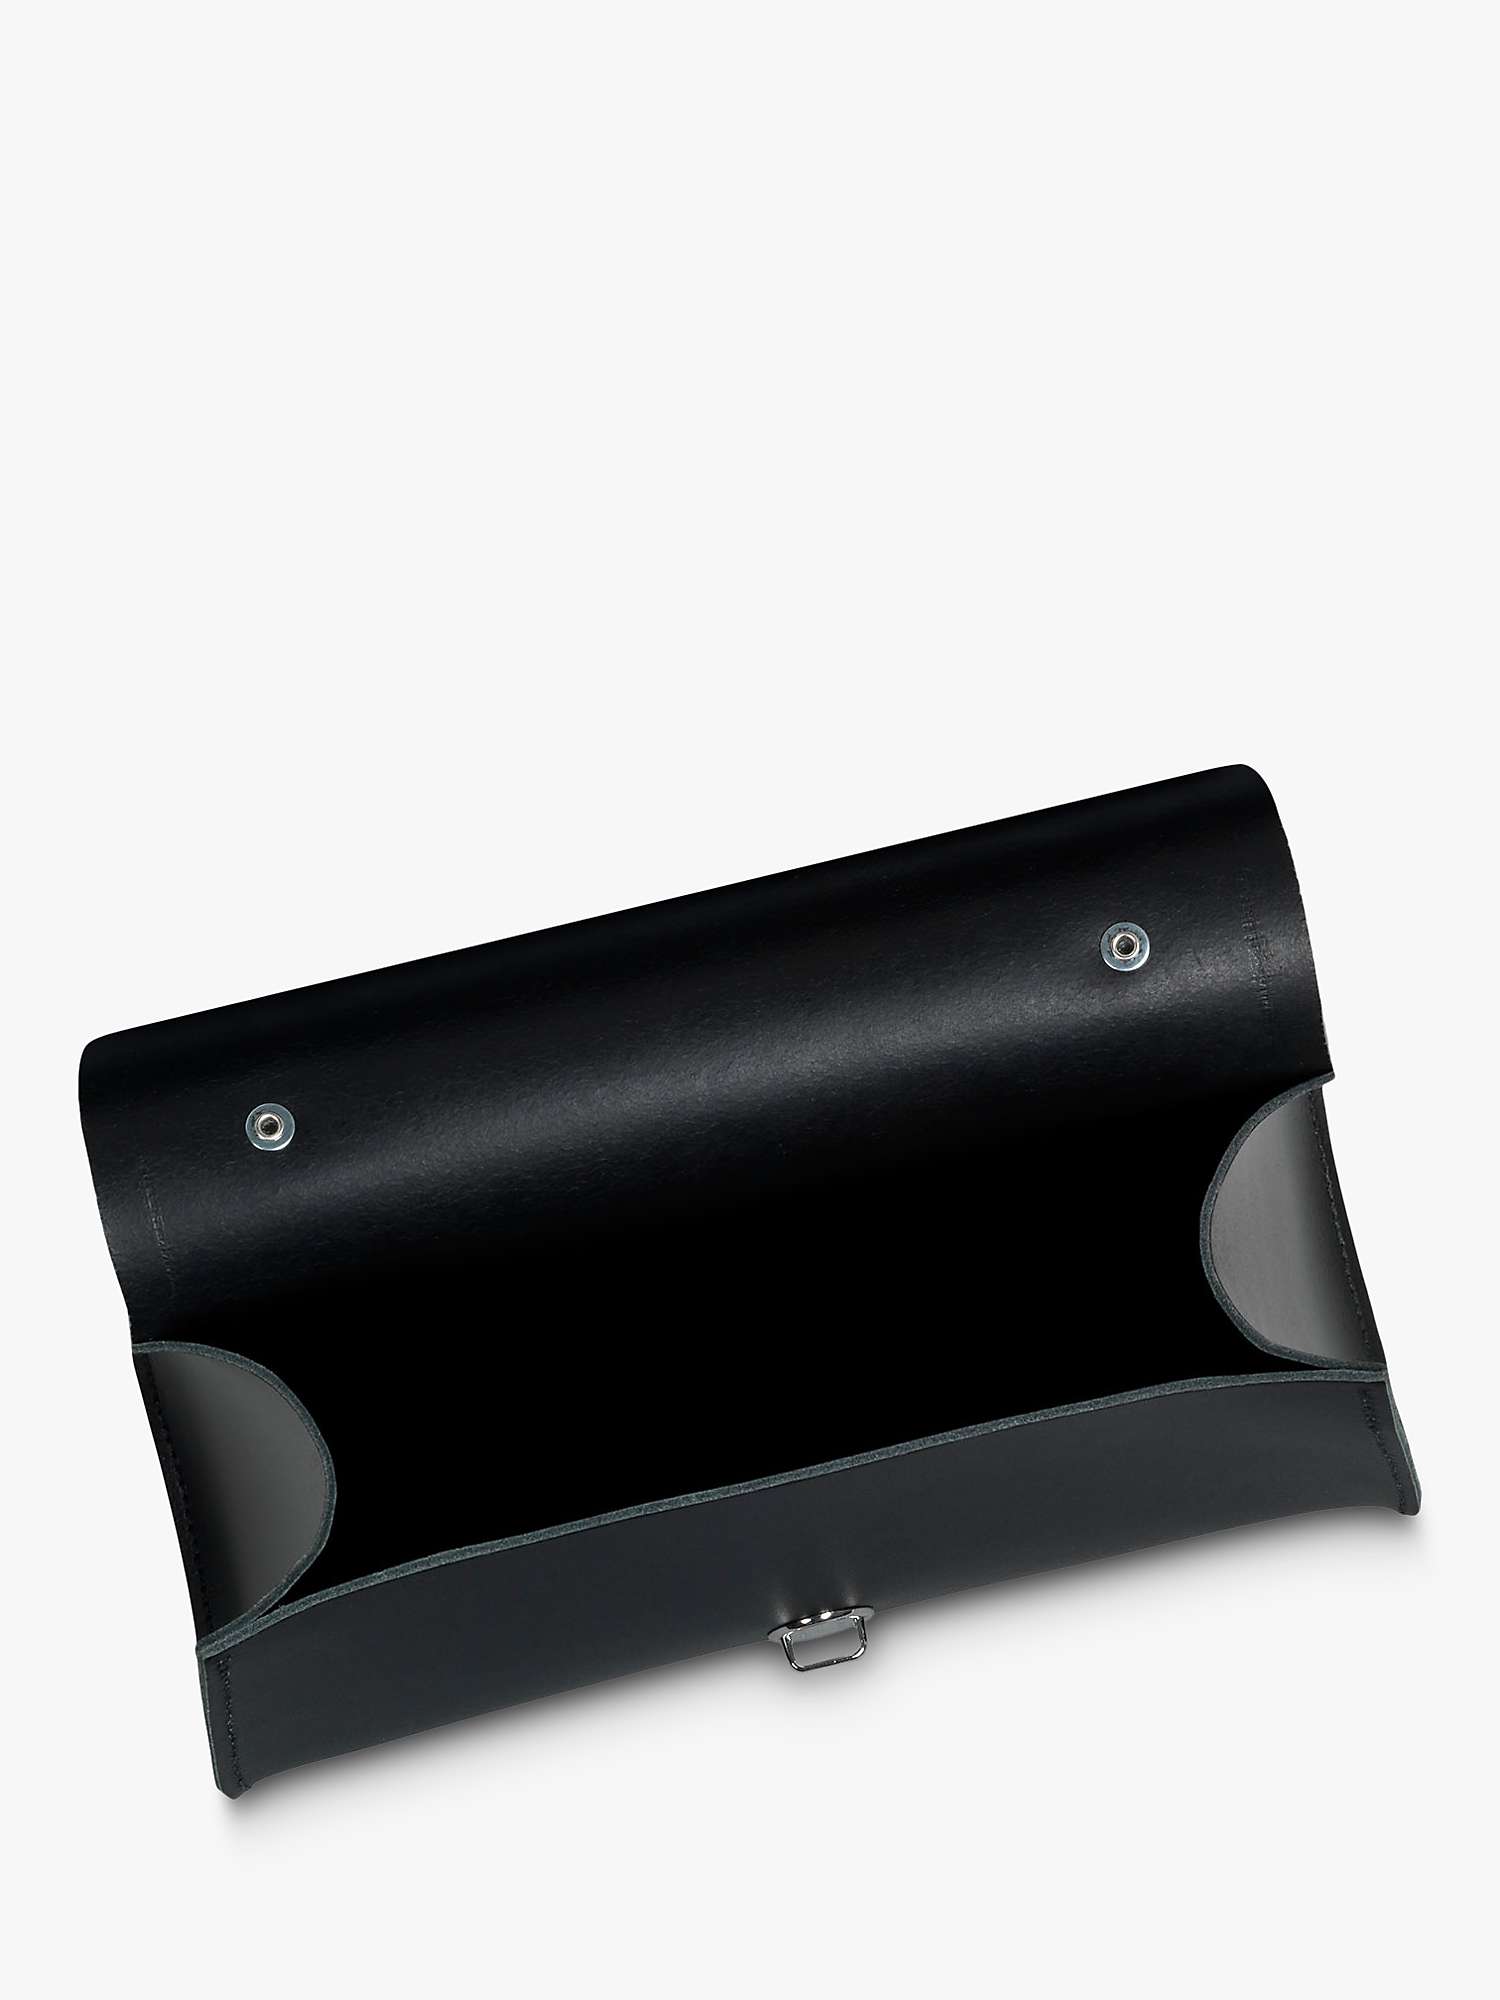 Buy Cambridge Satchel Poppy Leather Grab Bag Online at johnlewis.com